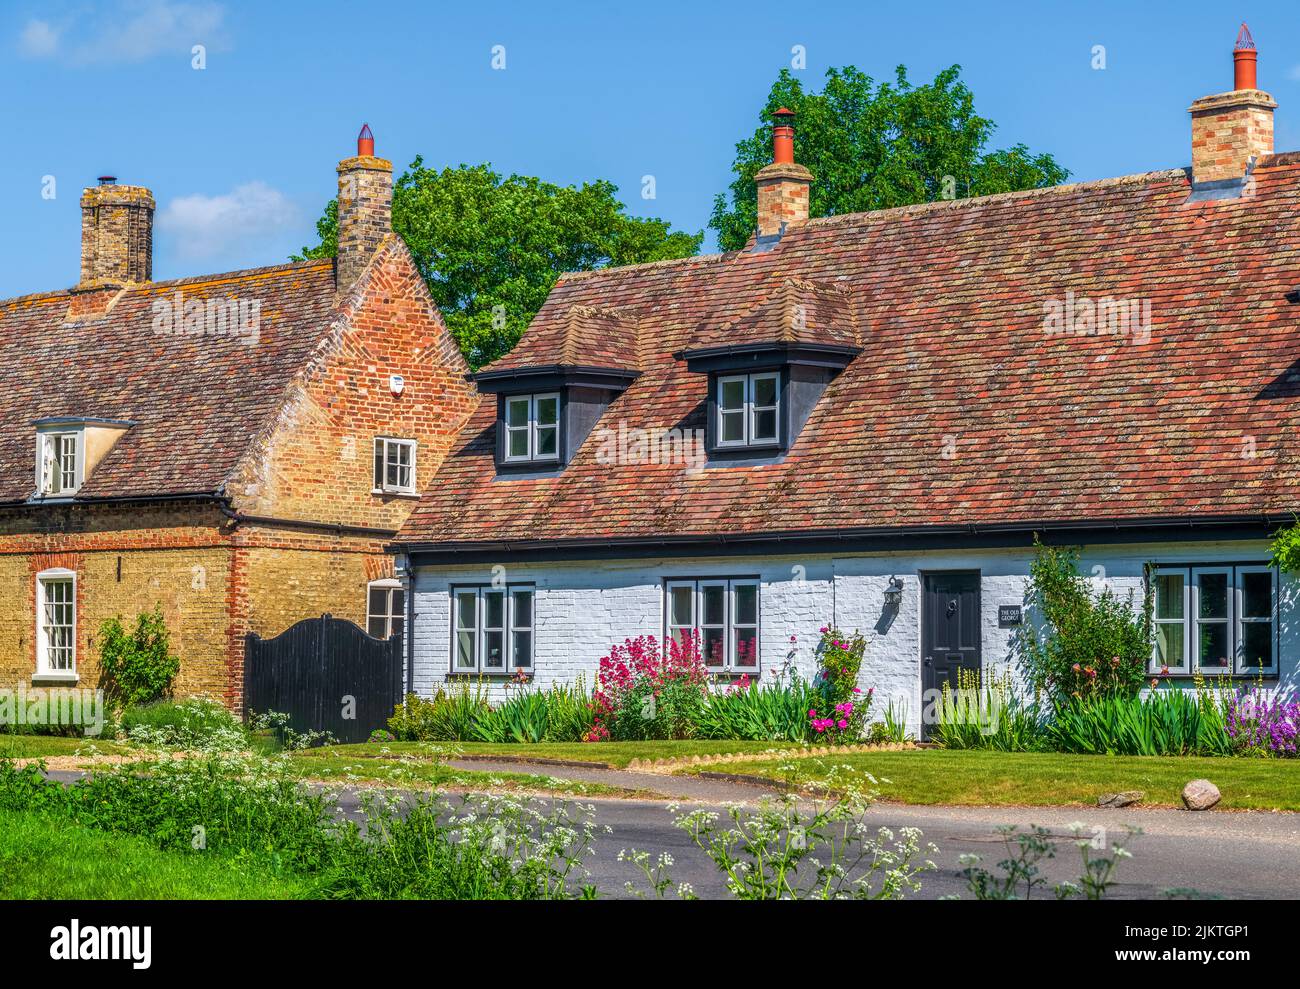 Royaume-Uni, Angleterre, Cambridgeshire, Hilton, Cottage traditionnel Banque D'Images